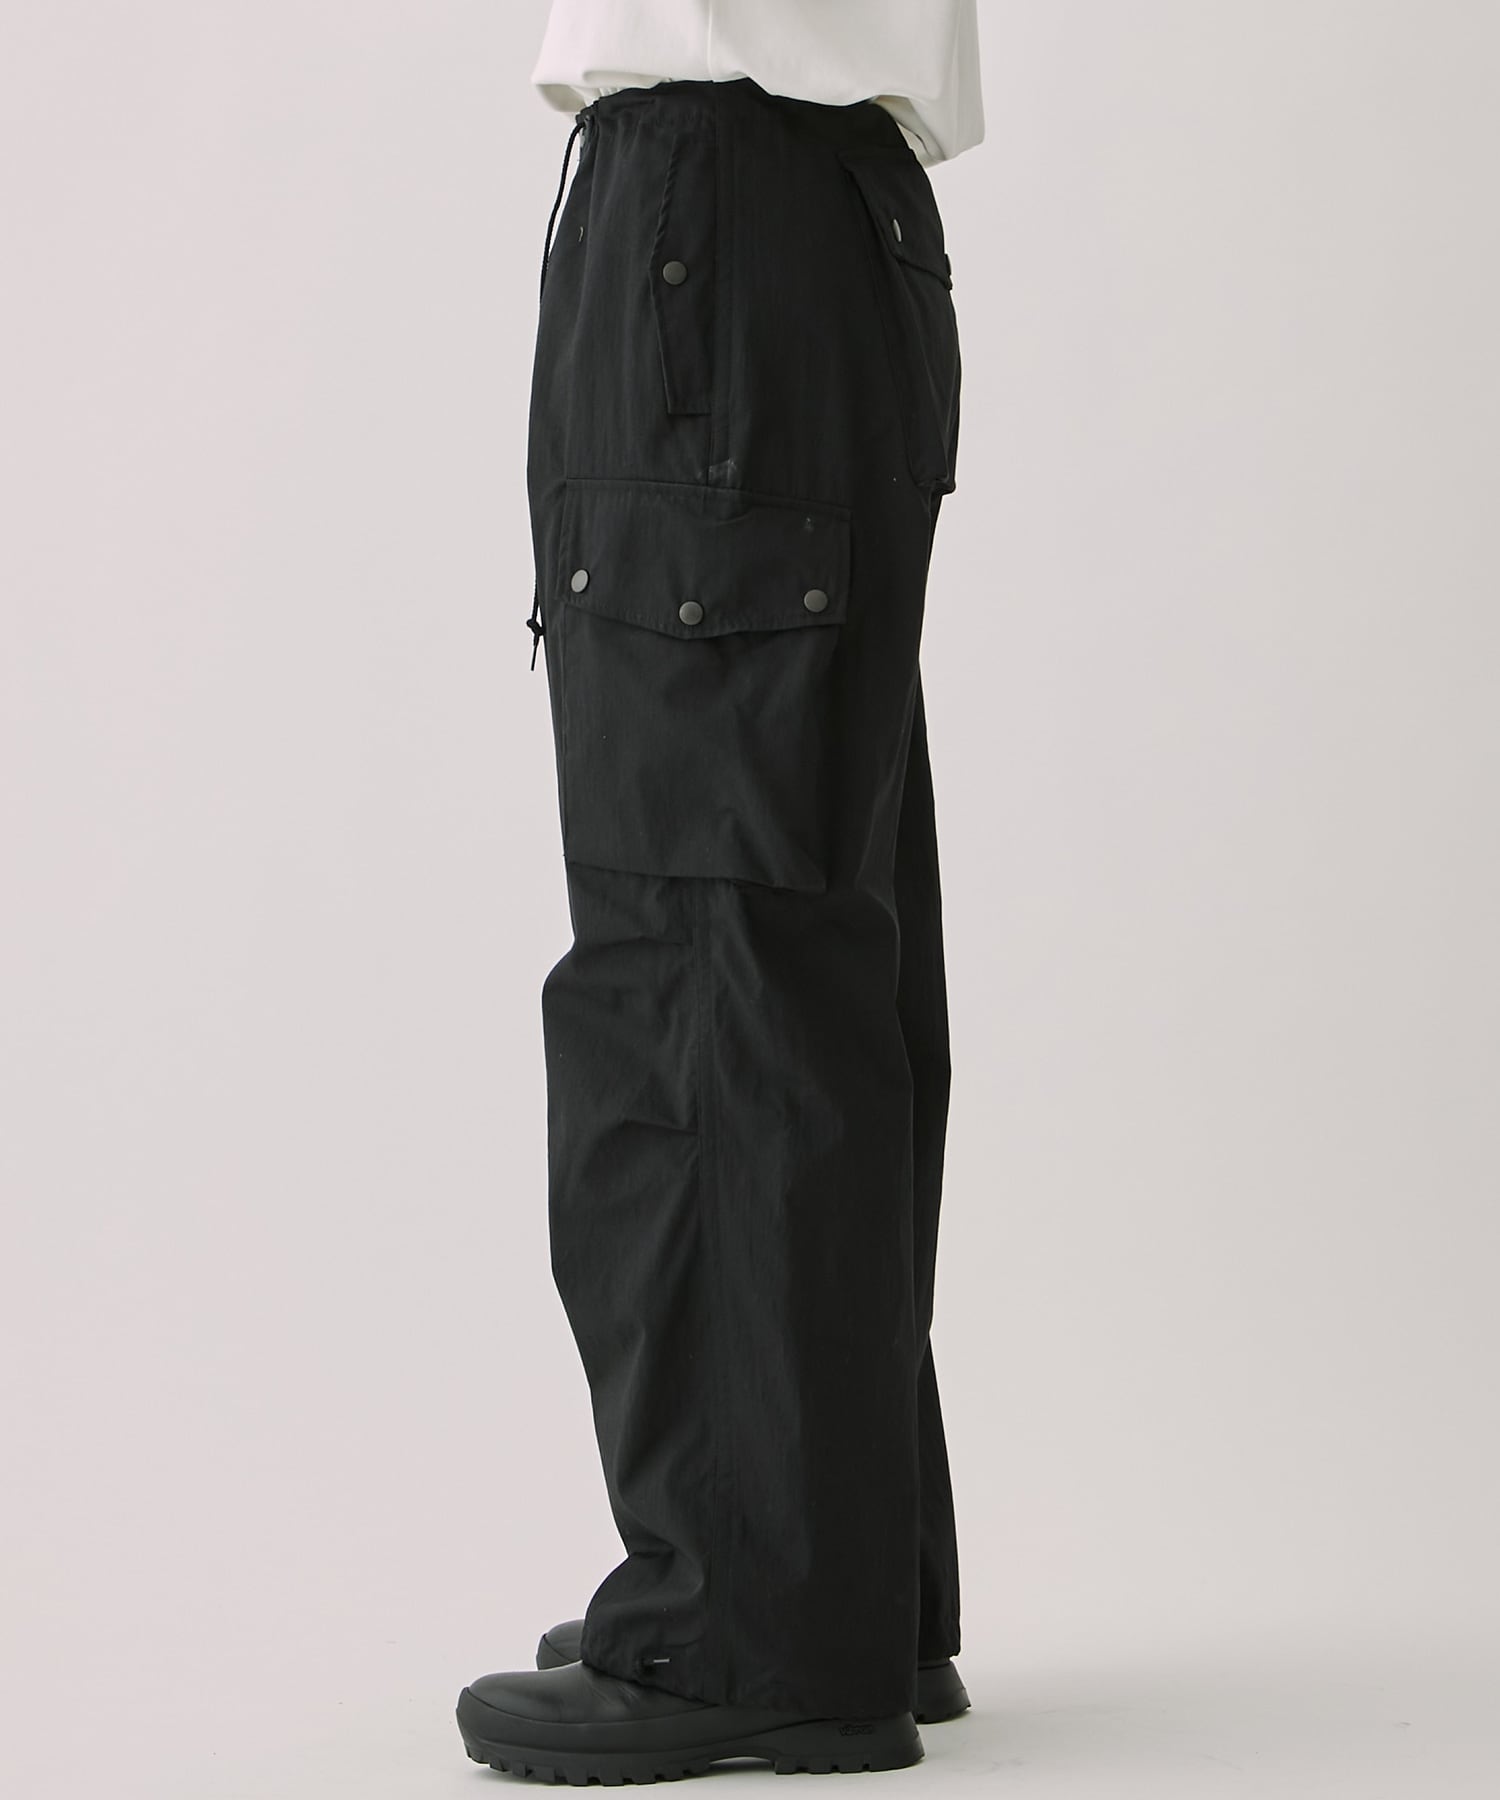 Field Pant - C/N Oxford Cloth NEEDLES